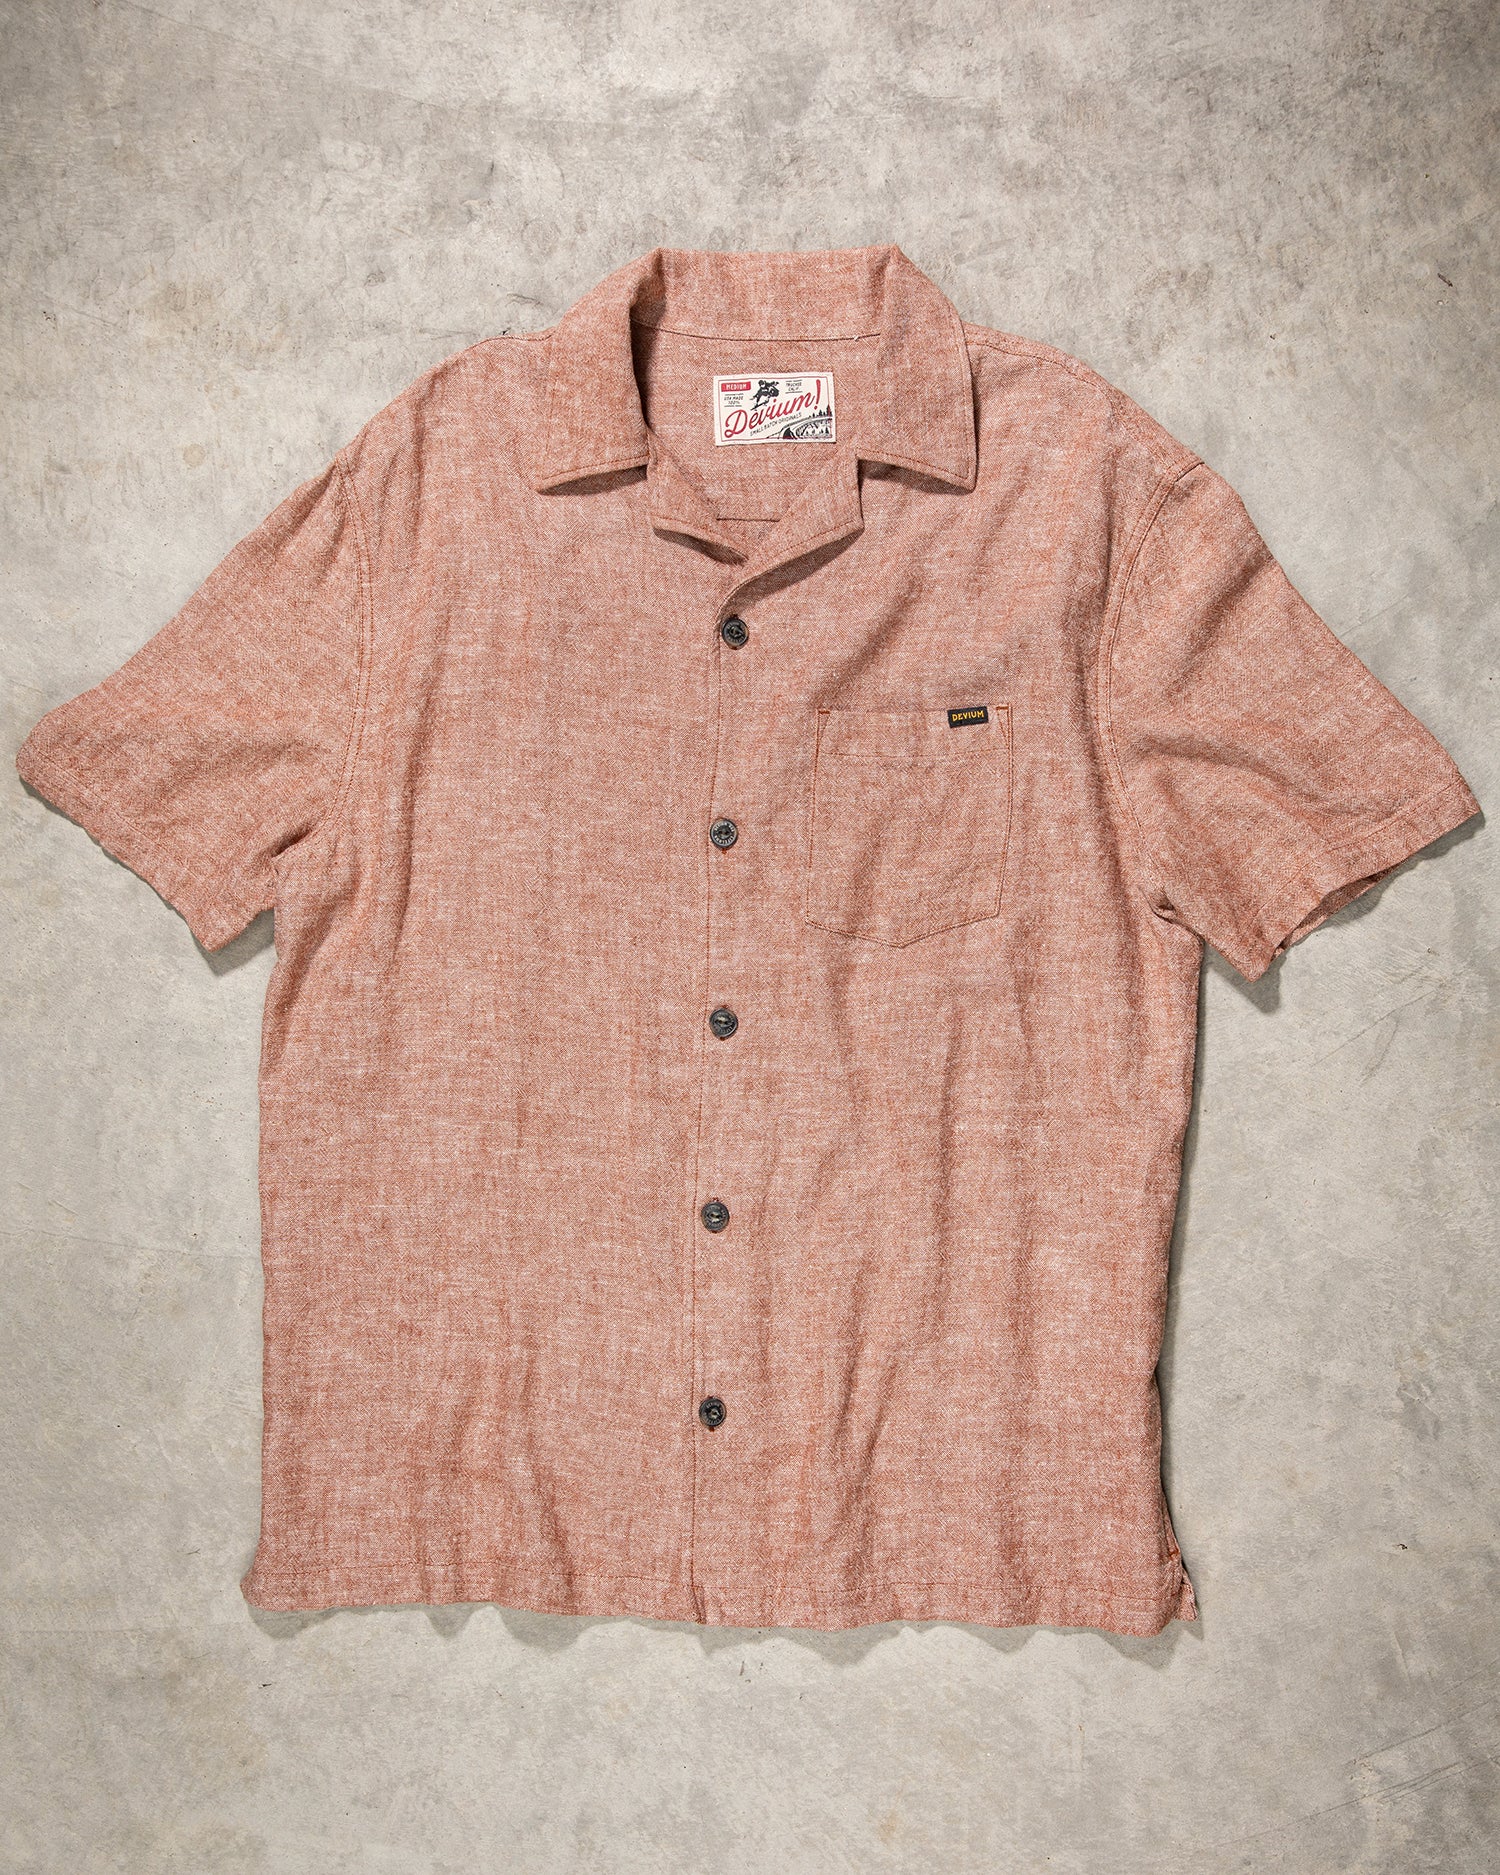 Devium USA Strickland Short Sleeve Shirt posted by ProdOrigin USA in Men's Apparel